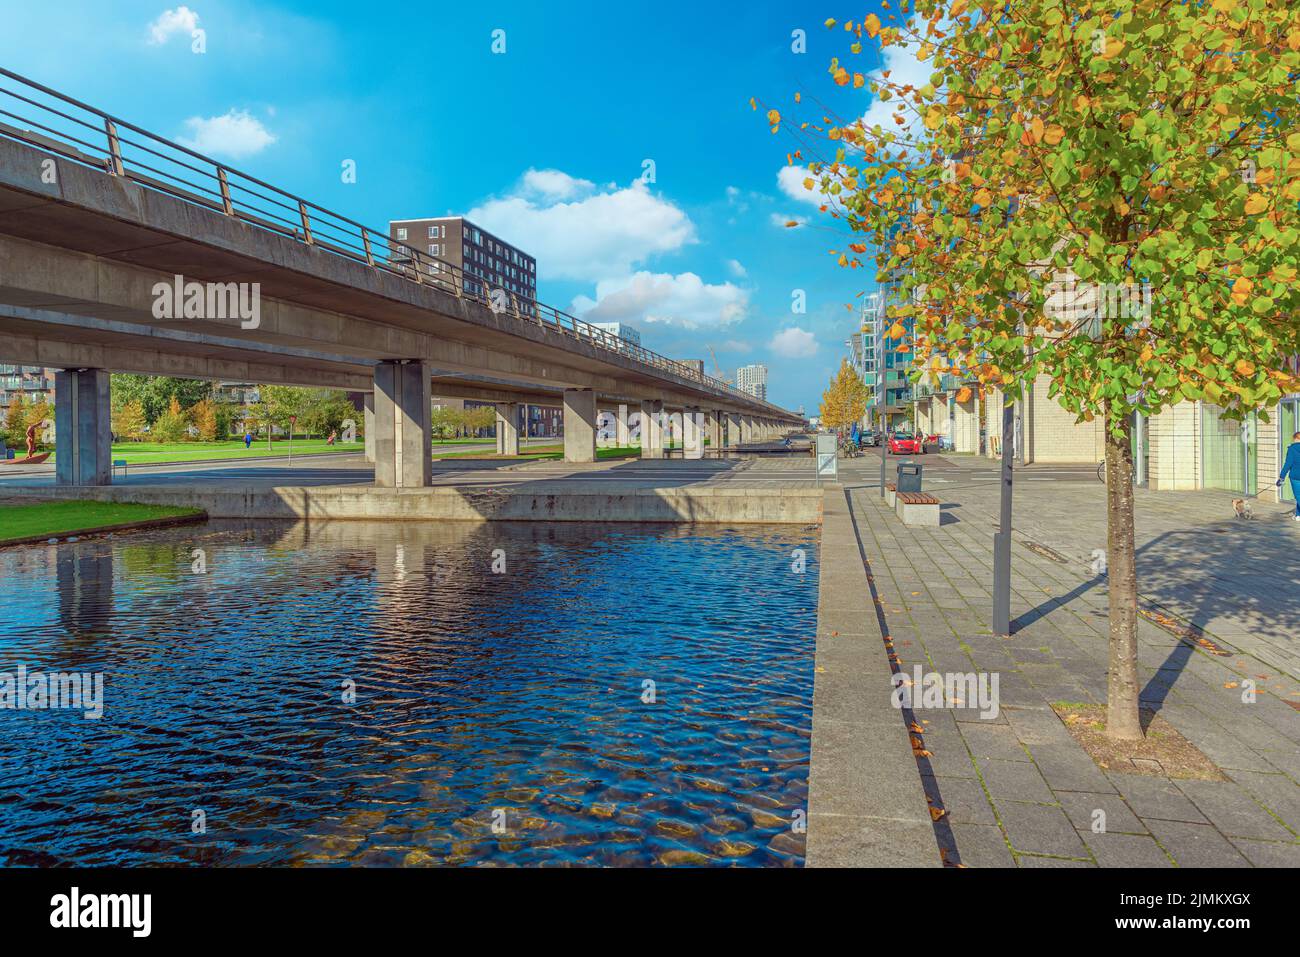 Water canal, metro line and pedestrian street near Ã˜restad boulevard in Copenhagen, Denmark Stock Photo